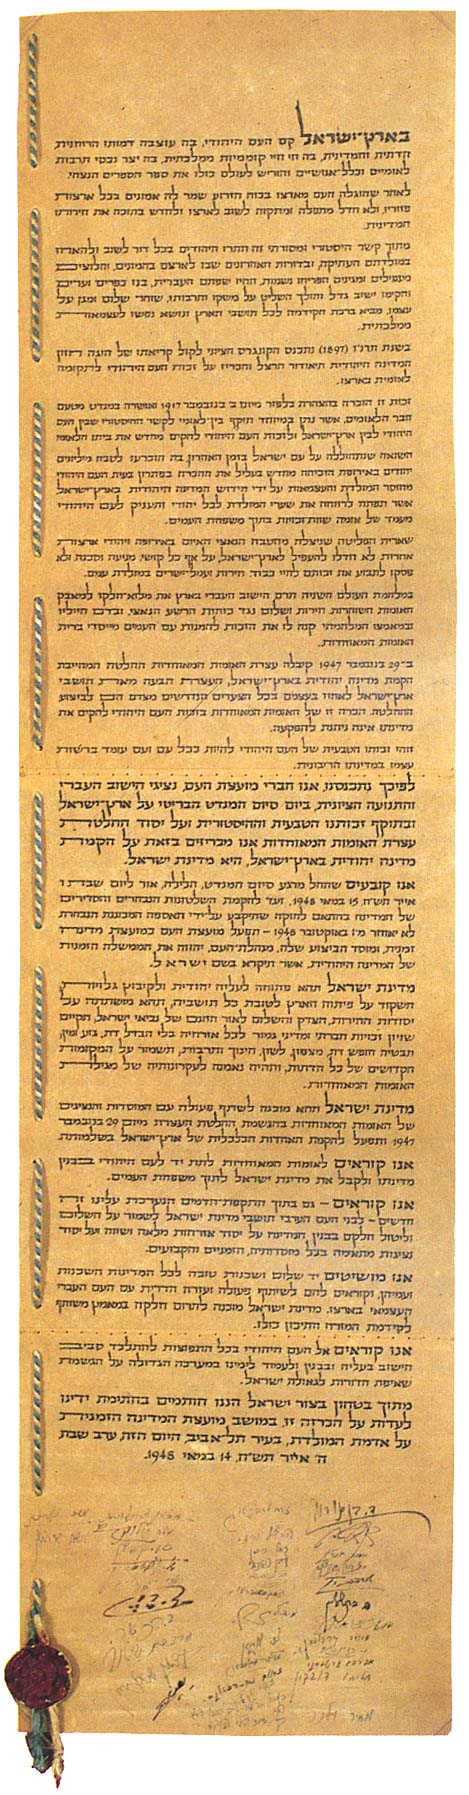 Israel Declaration Of Independence 